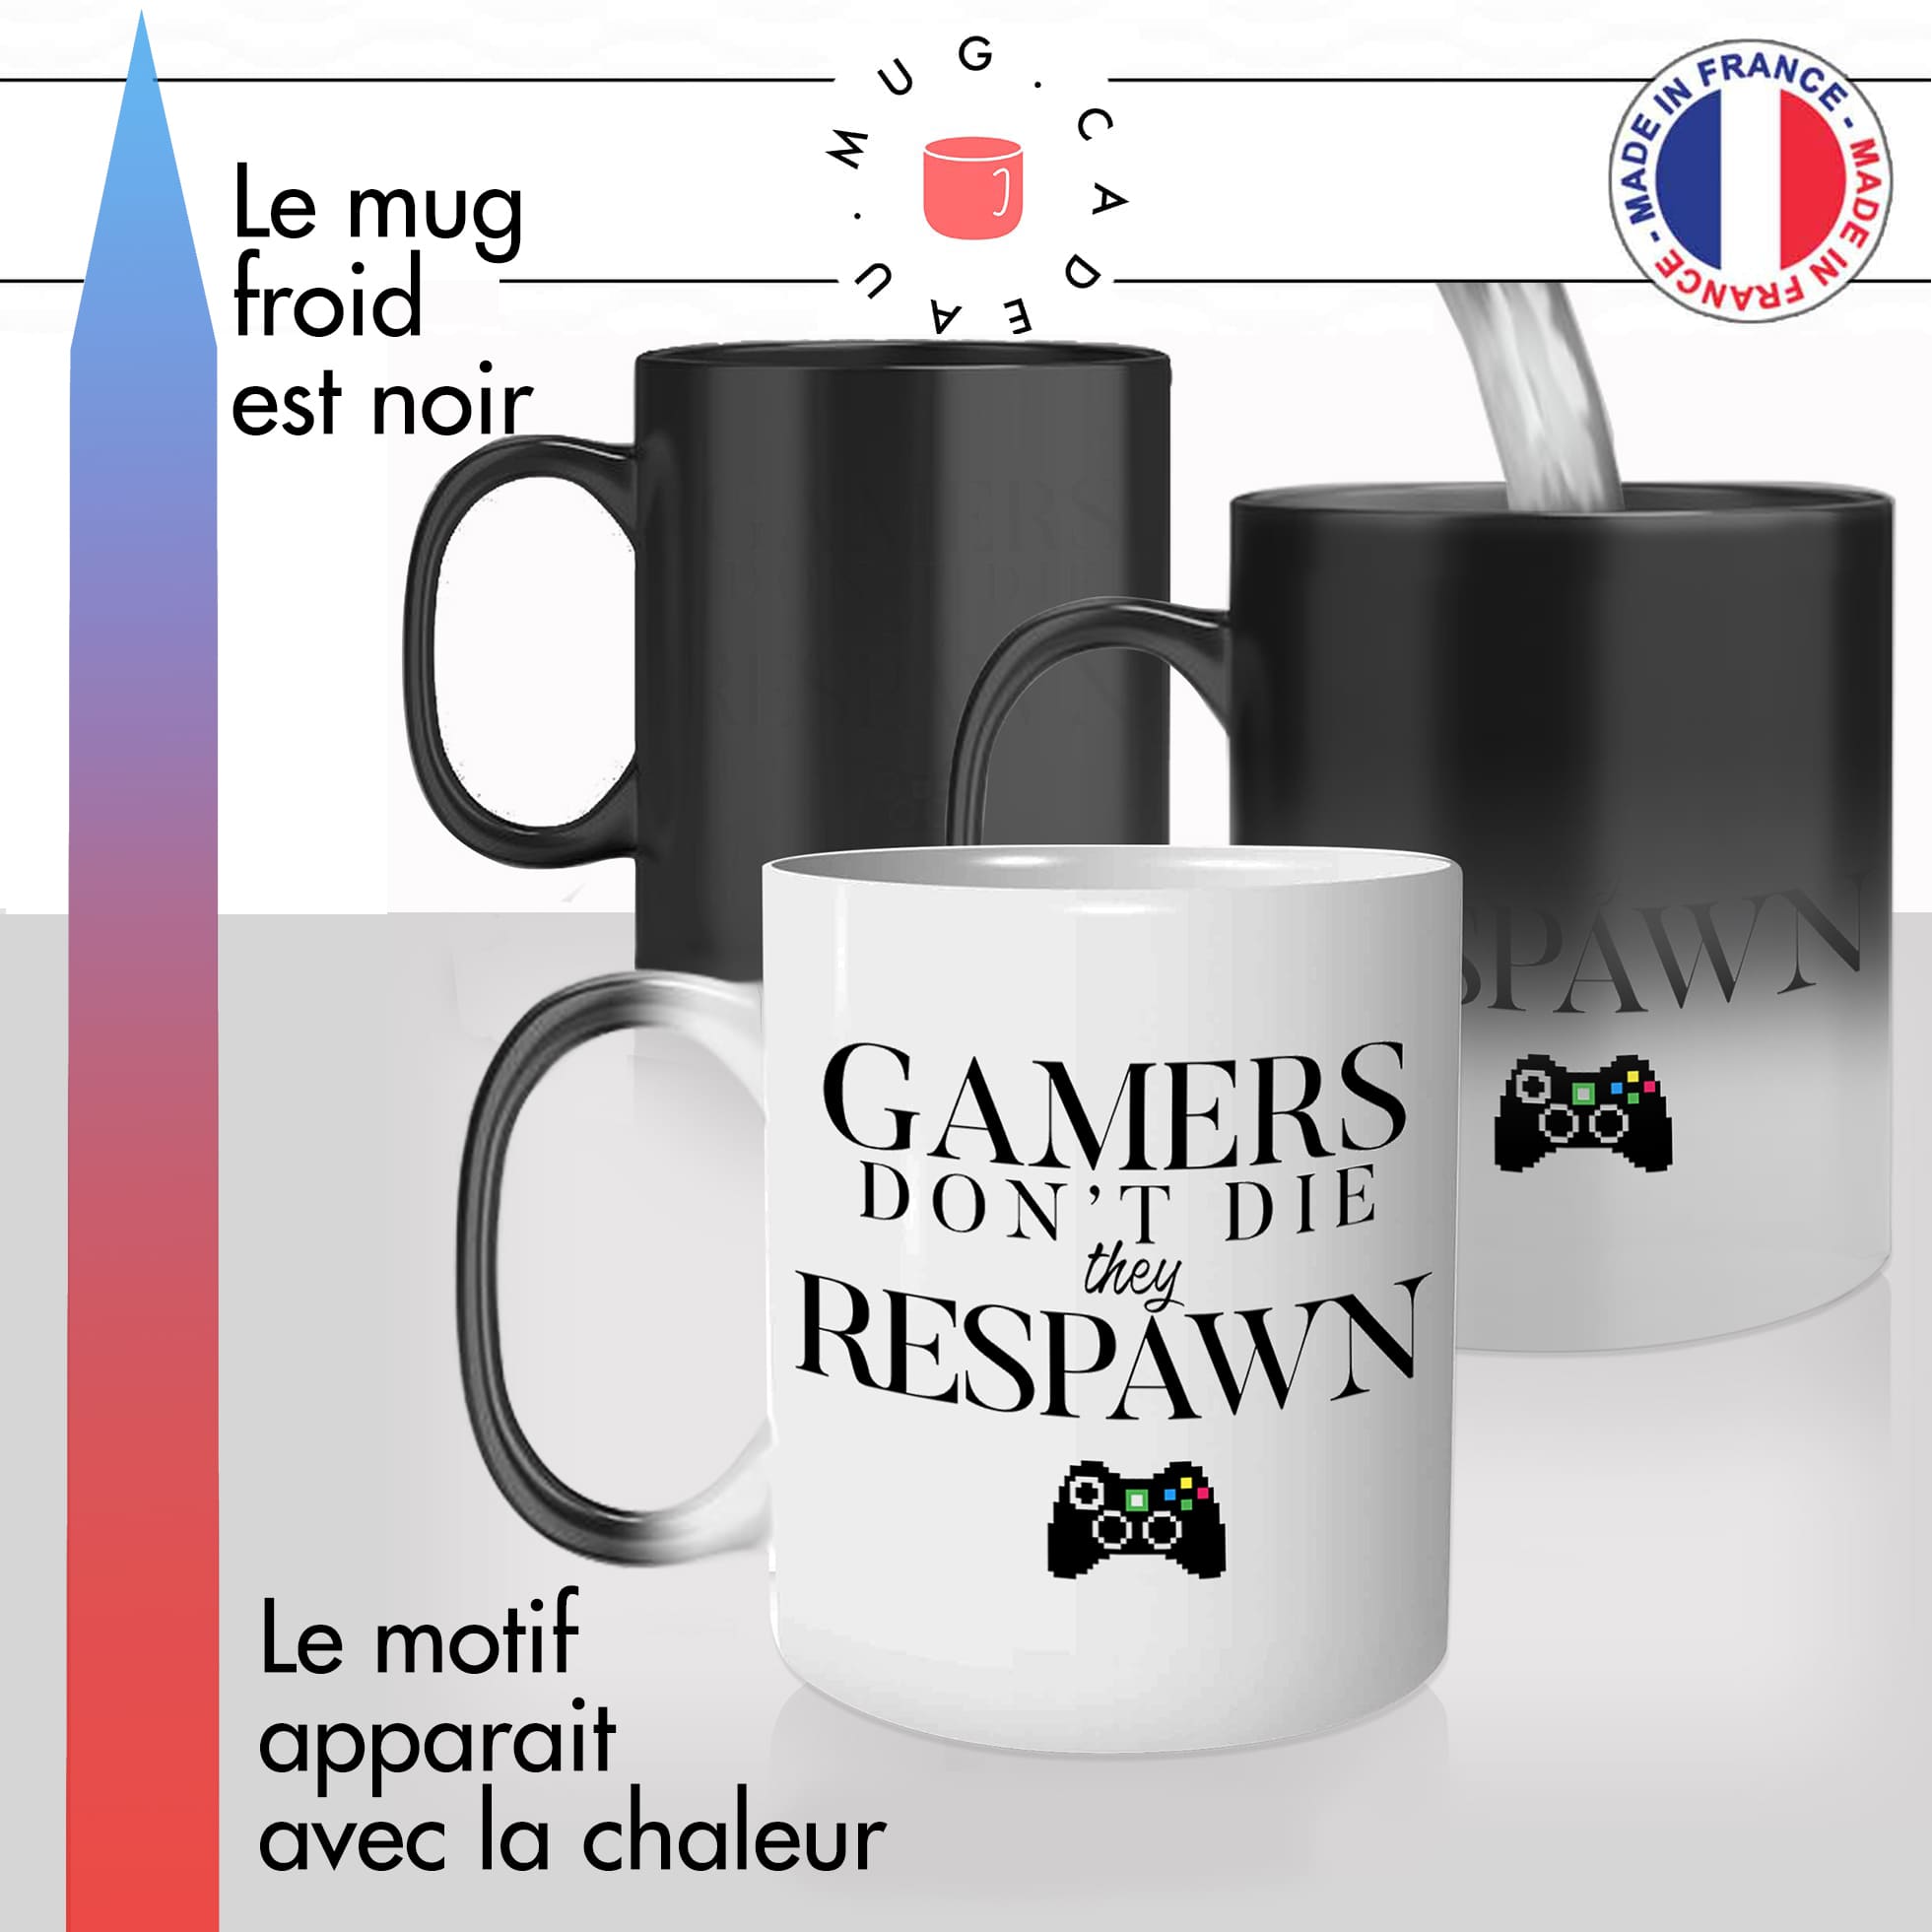 mug magique thermoréactif thermo chauffant personnalisé gamers dont die they respawn jeux video gaming manette idée cadeau fun original